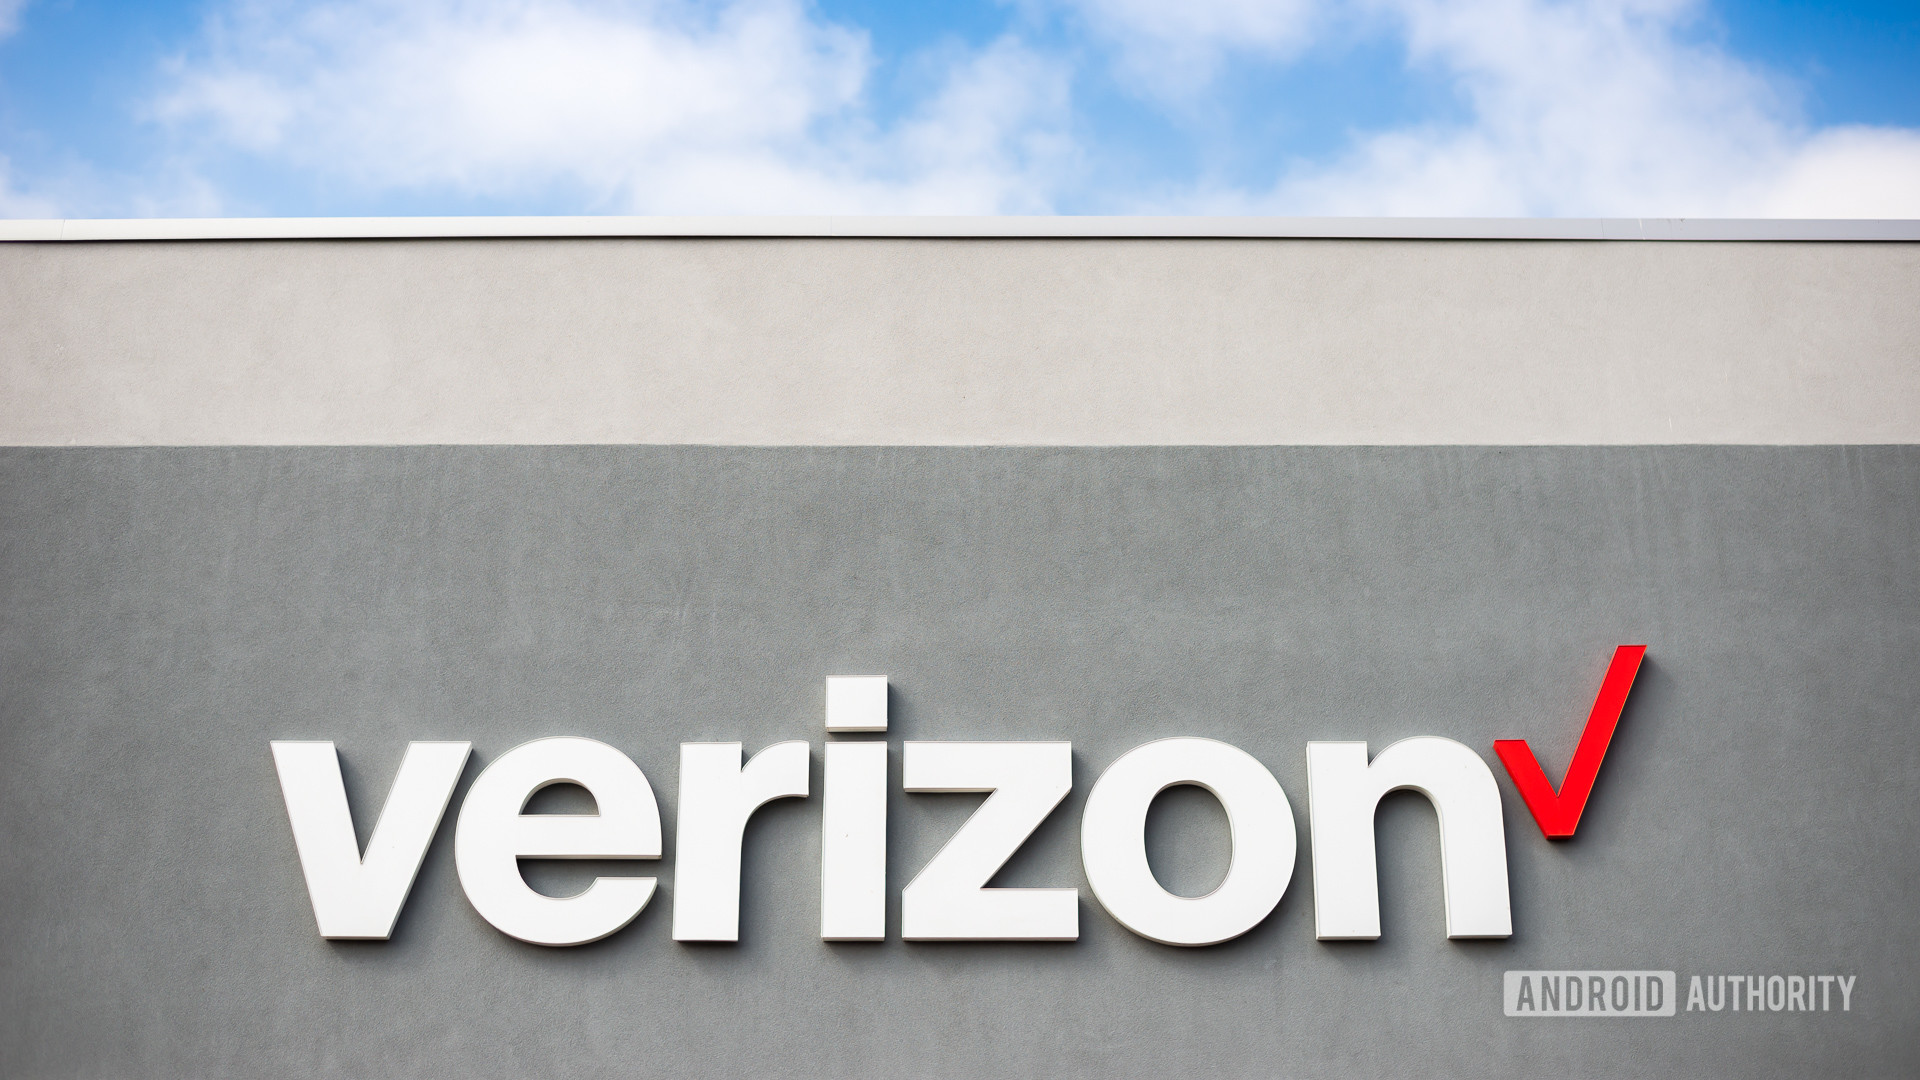 Verizon Wireless logo stock image 8 signal booster apps